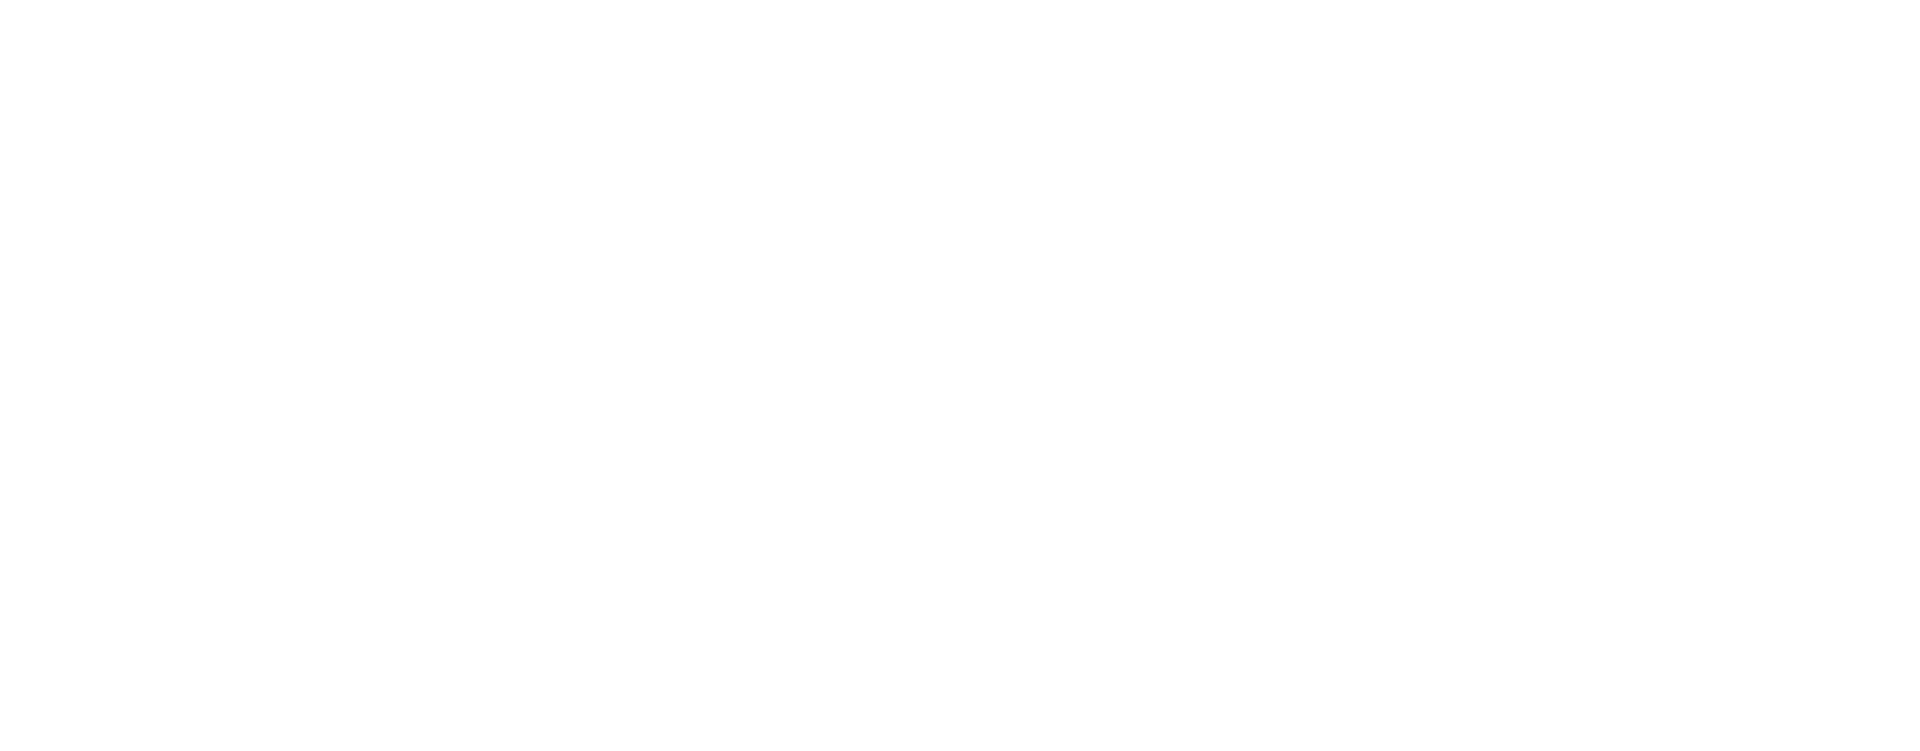 BHGRE-Paracle-White